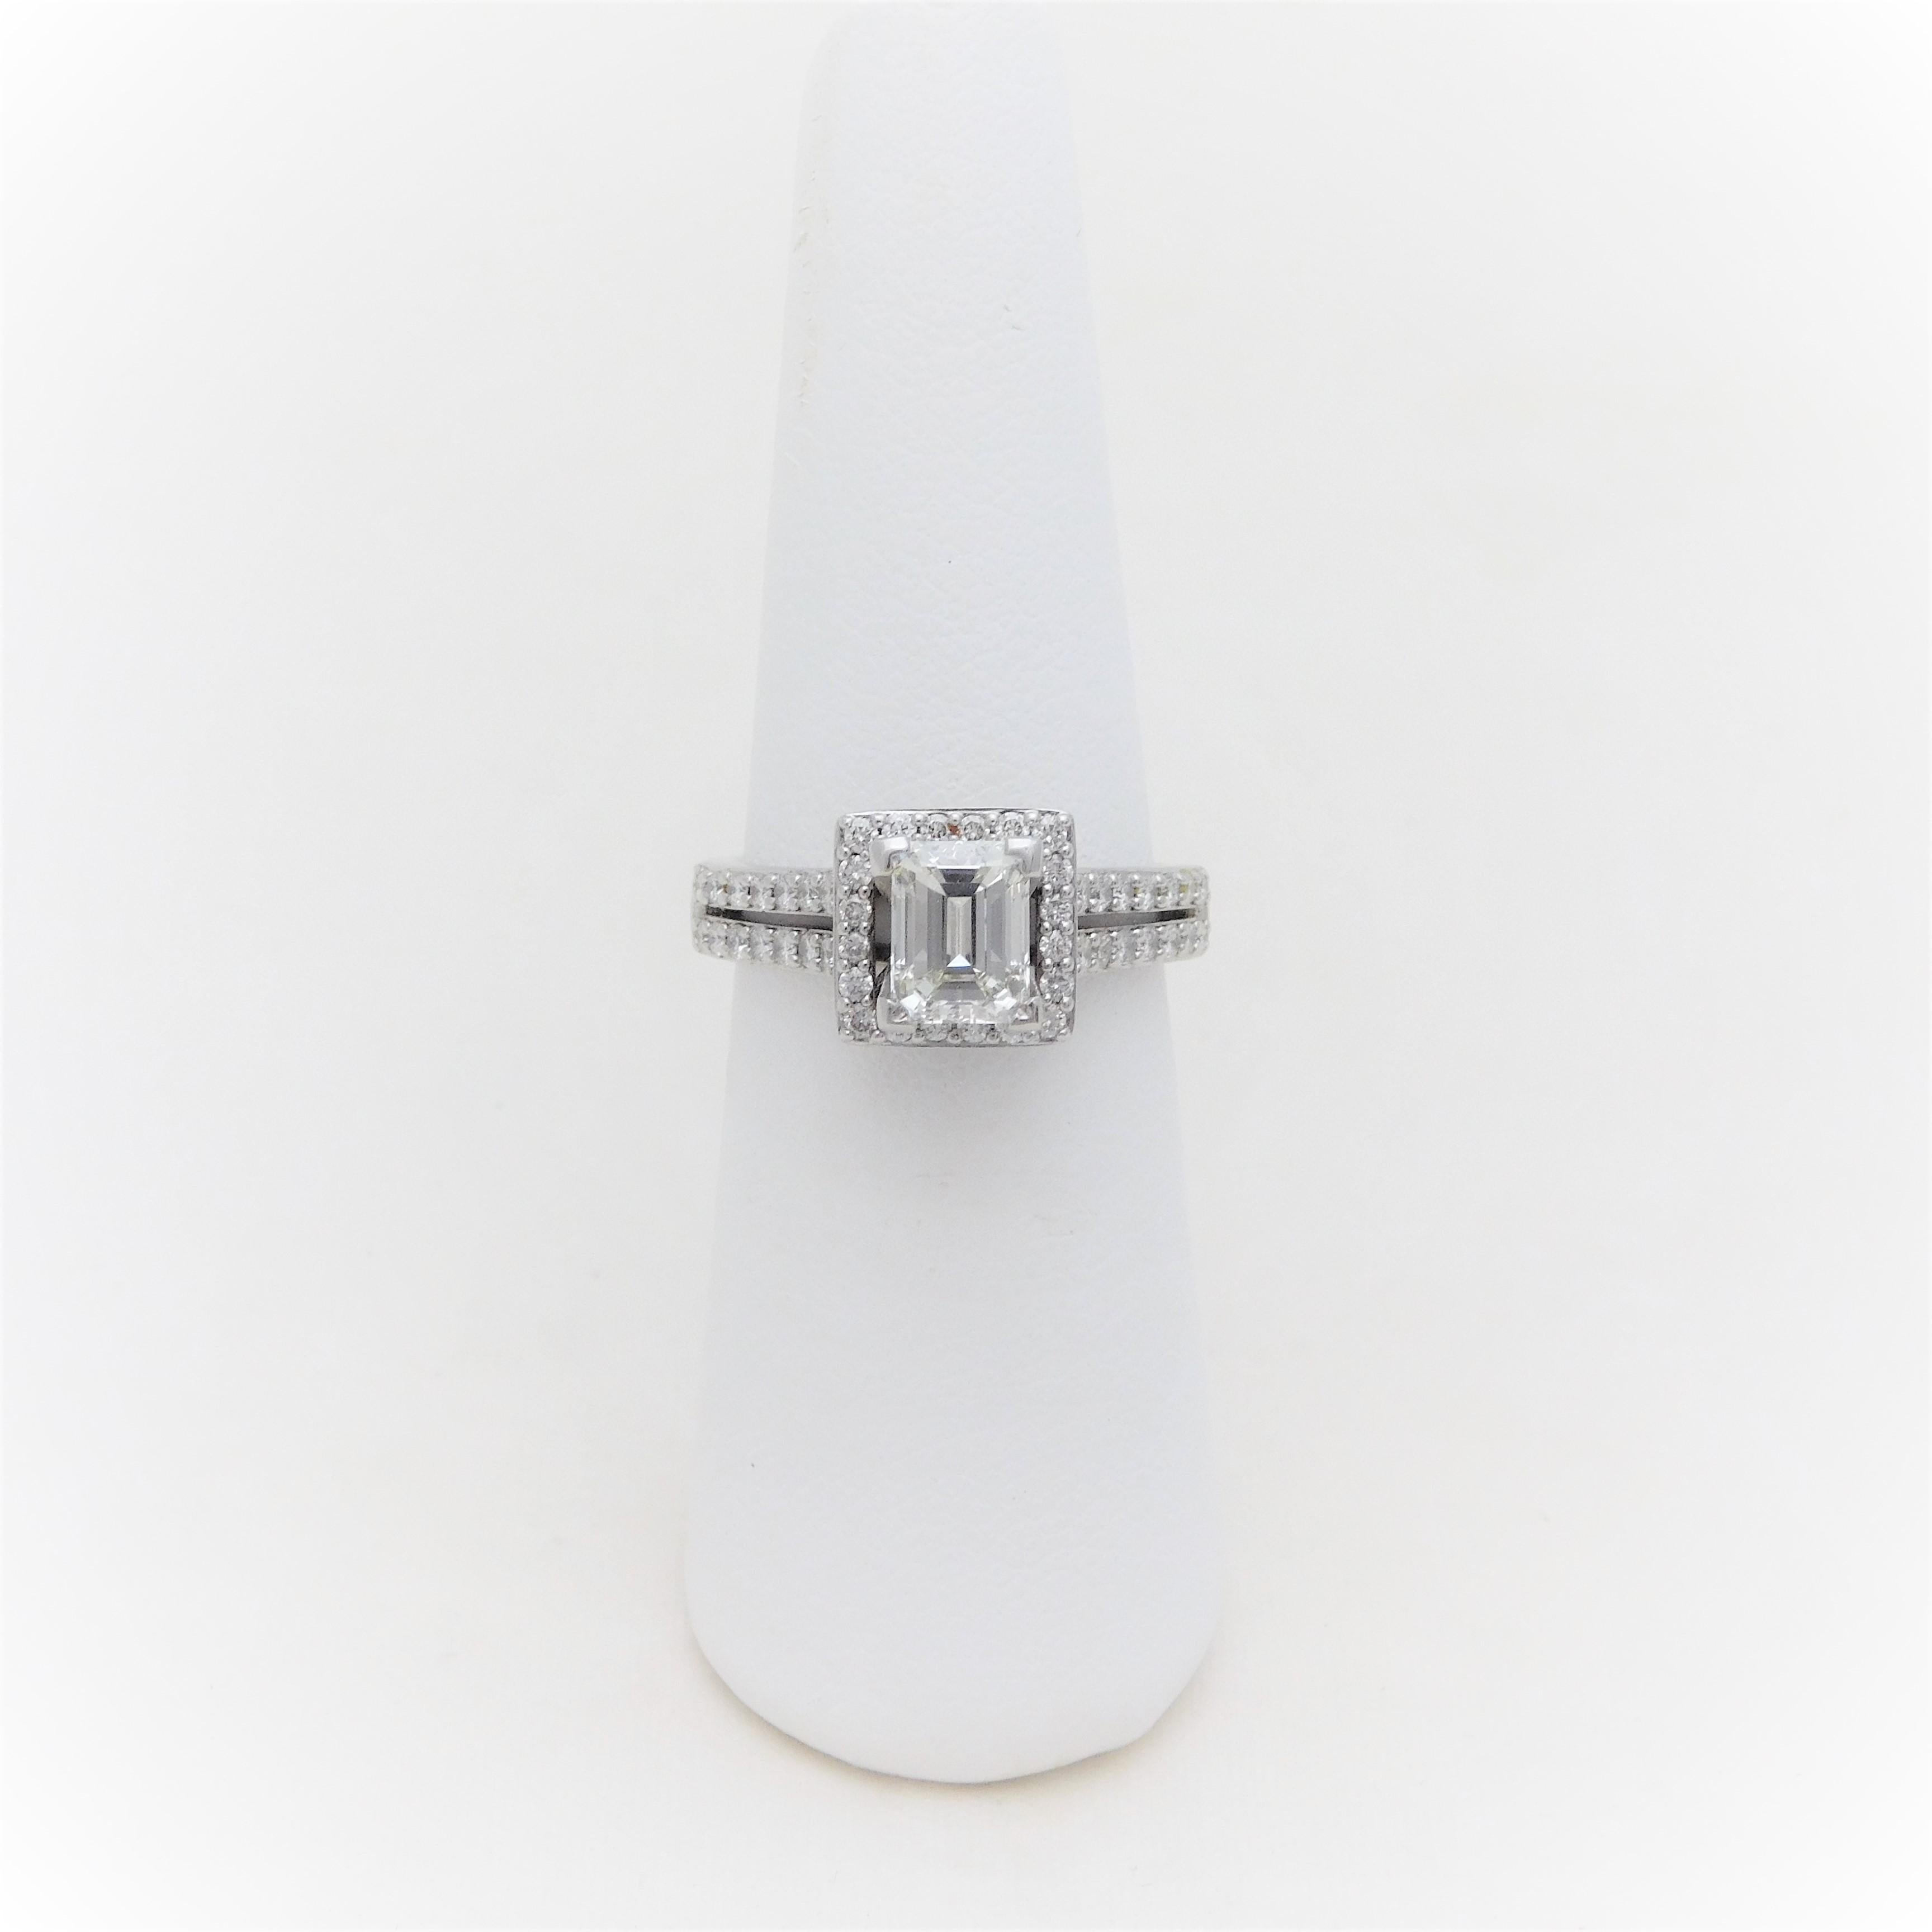 UGS Certified 2.18 Carat Emerald Cut Diamond Engagement Ring 9